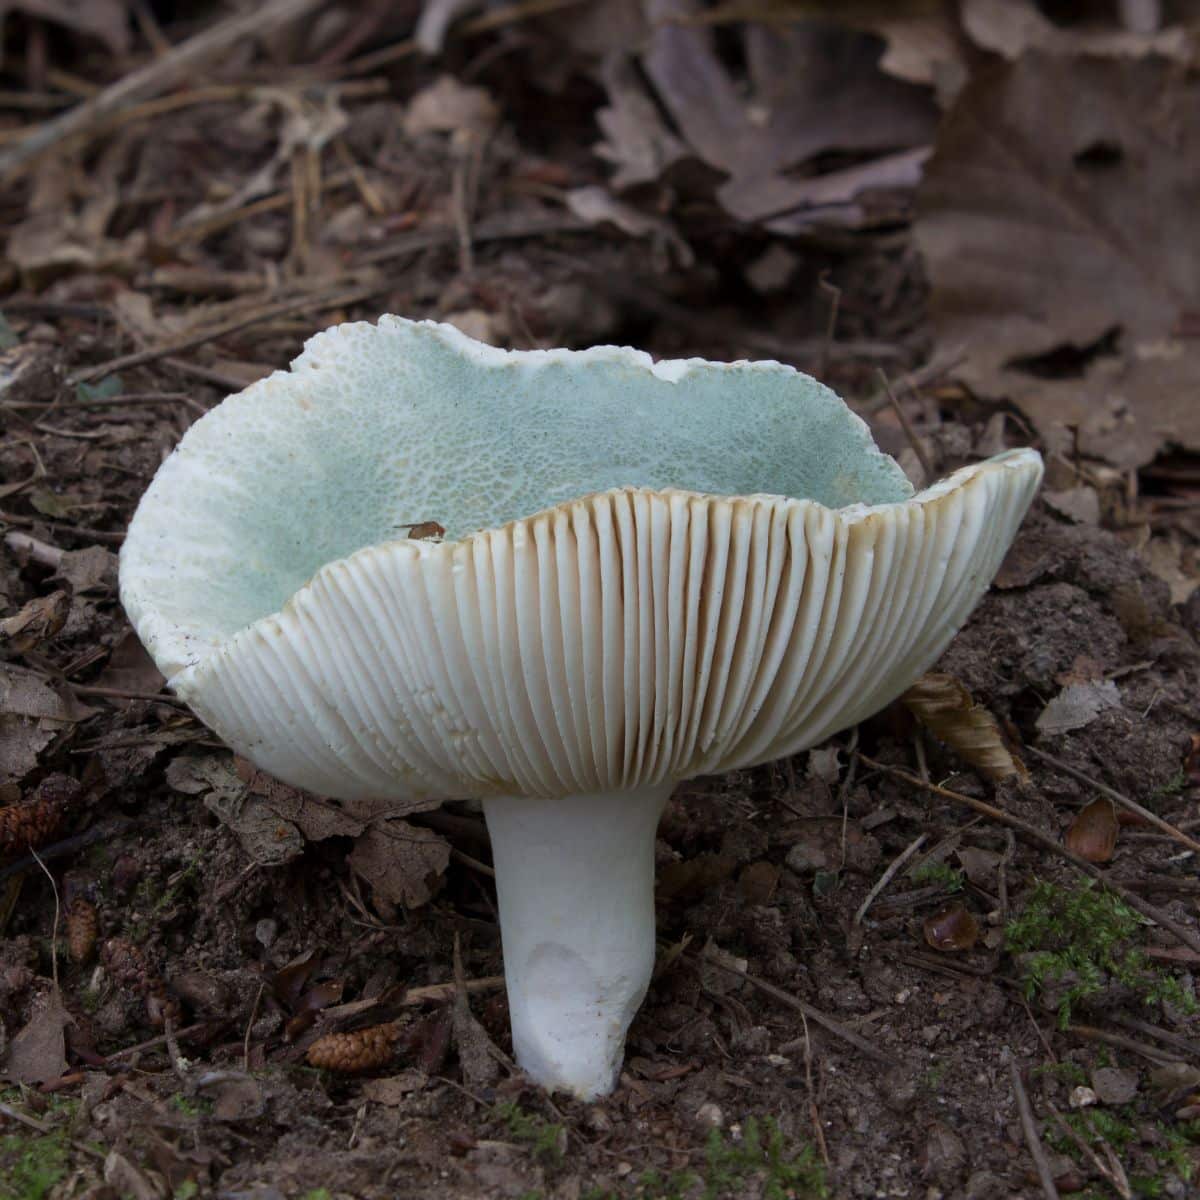 russula mushroom caps past maturity